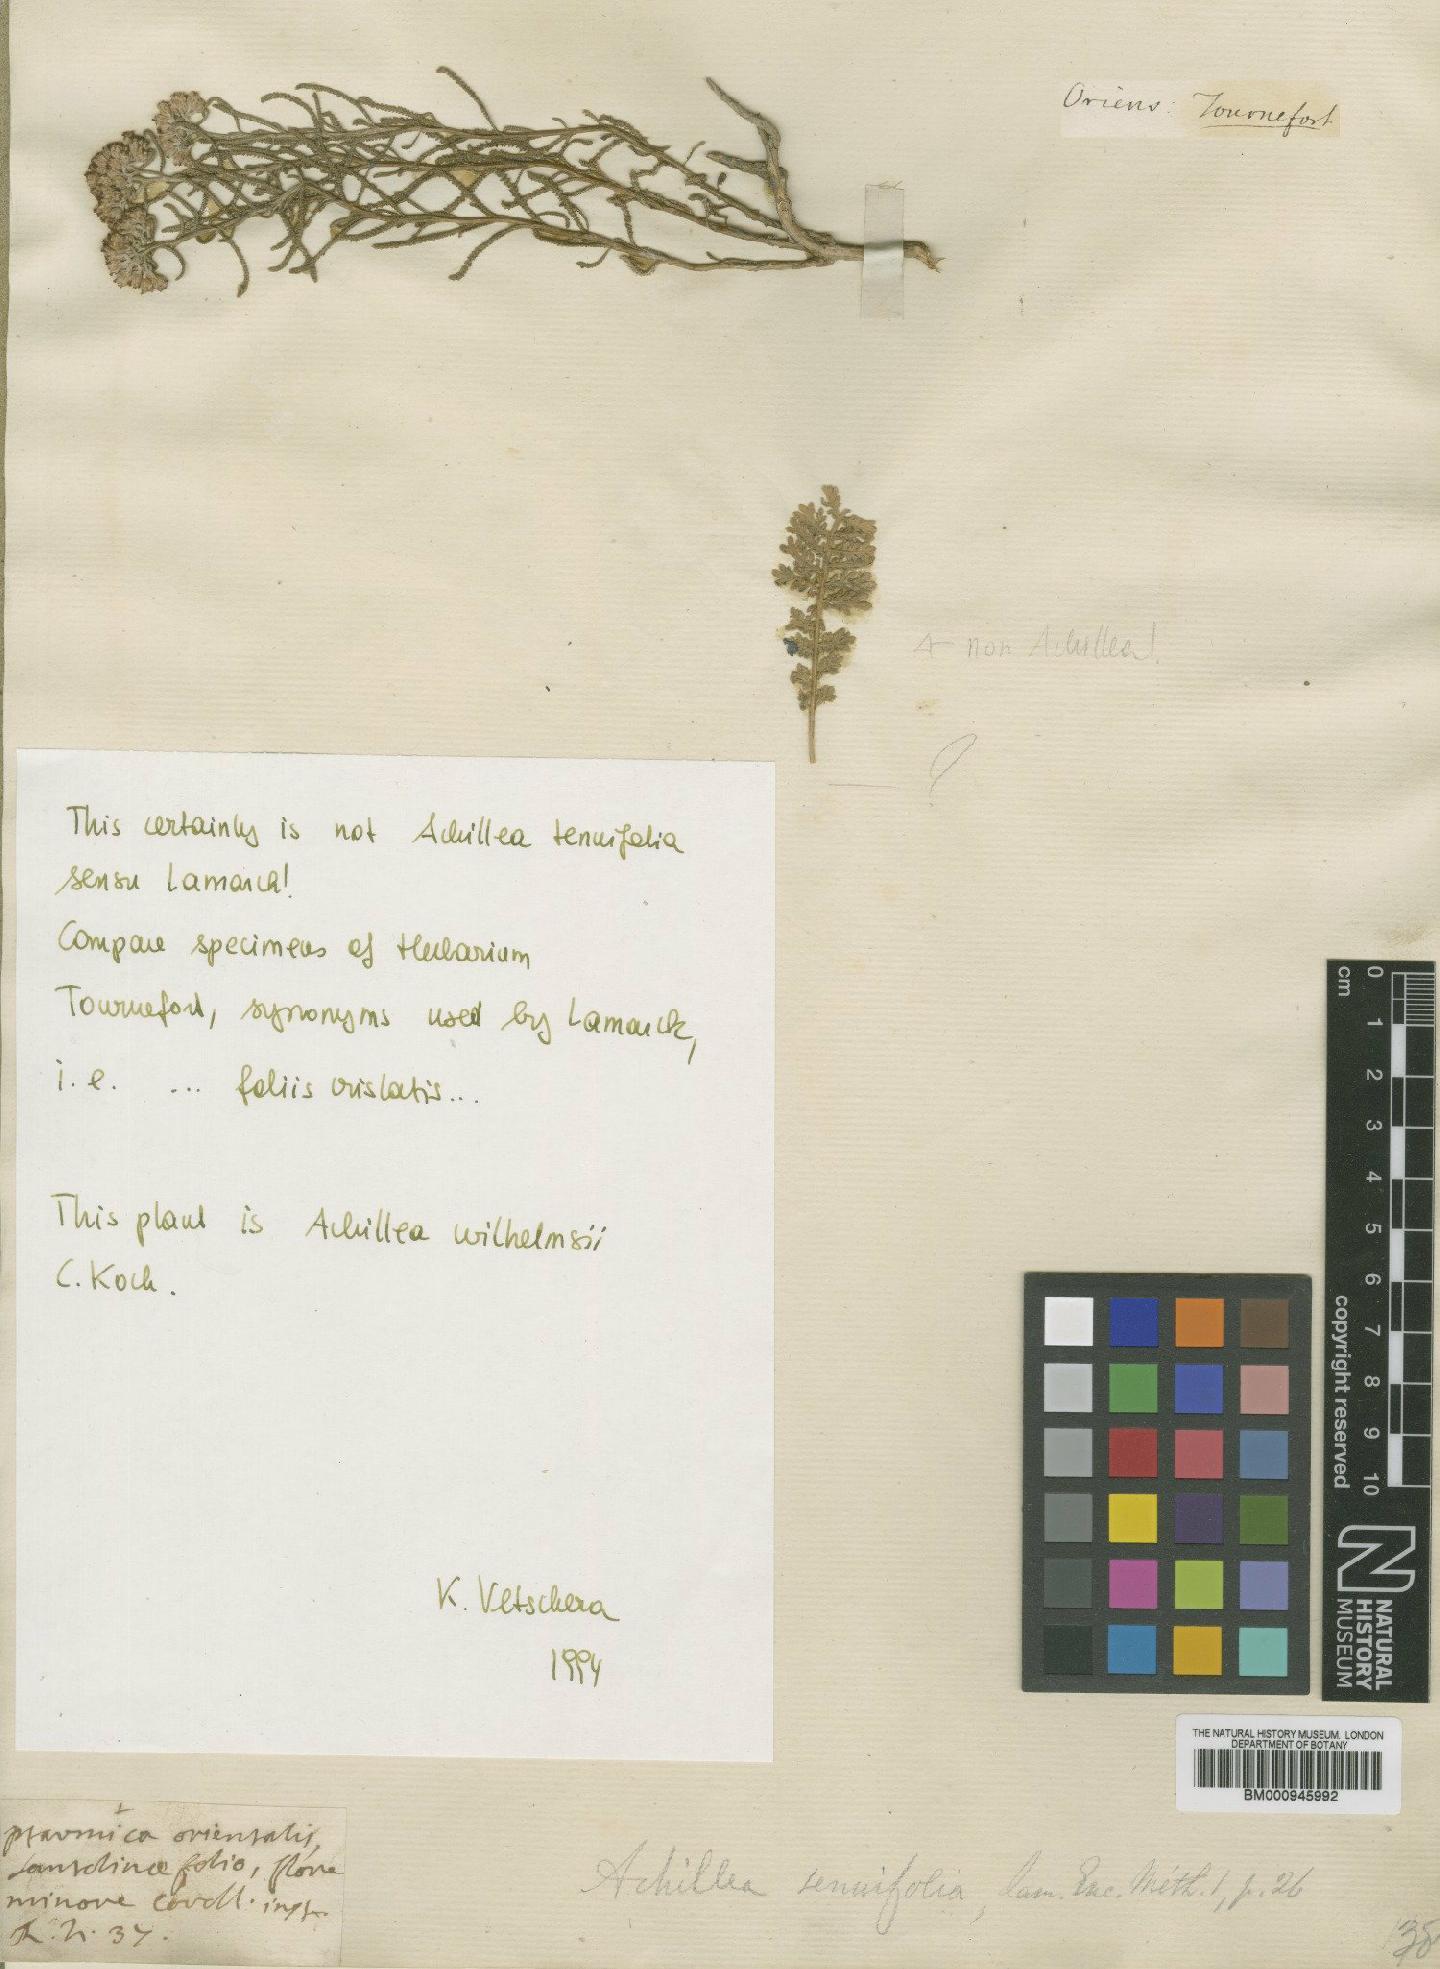 To NHMUK collection (Achillea wilhelmsii K.Koch; Type; NHMUK:ecatalogue:474289)